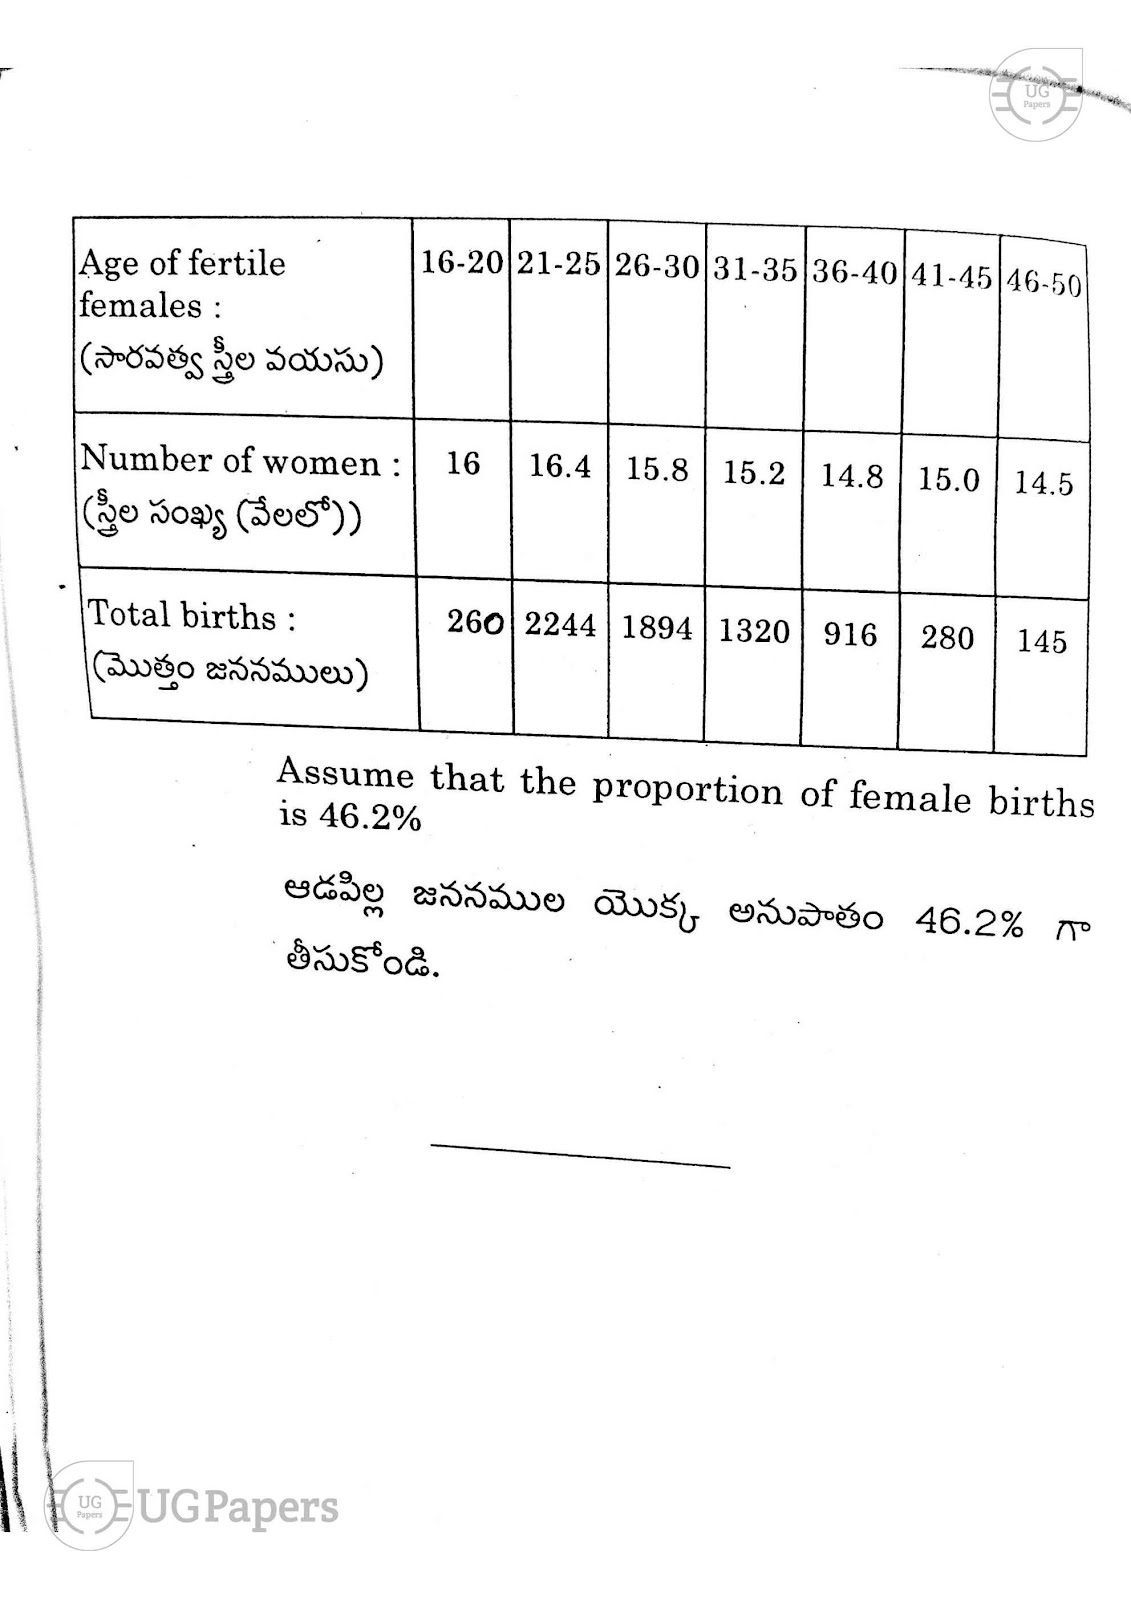 ugpapers.com, Andhra University, Semester 6, Statistics common-A applied statistics 2020